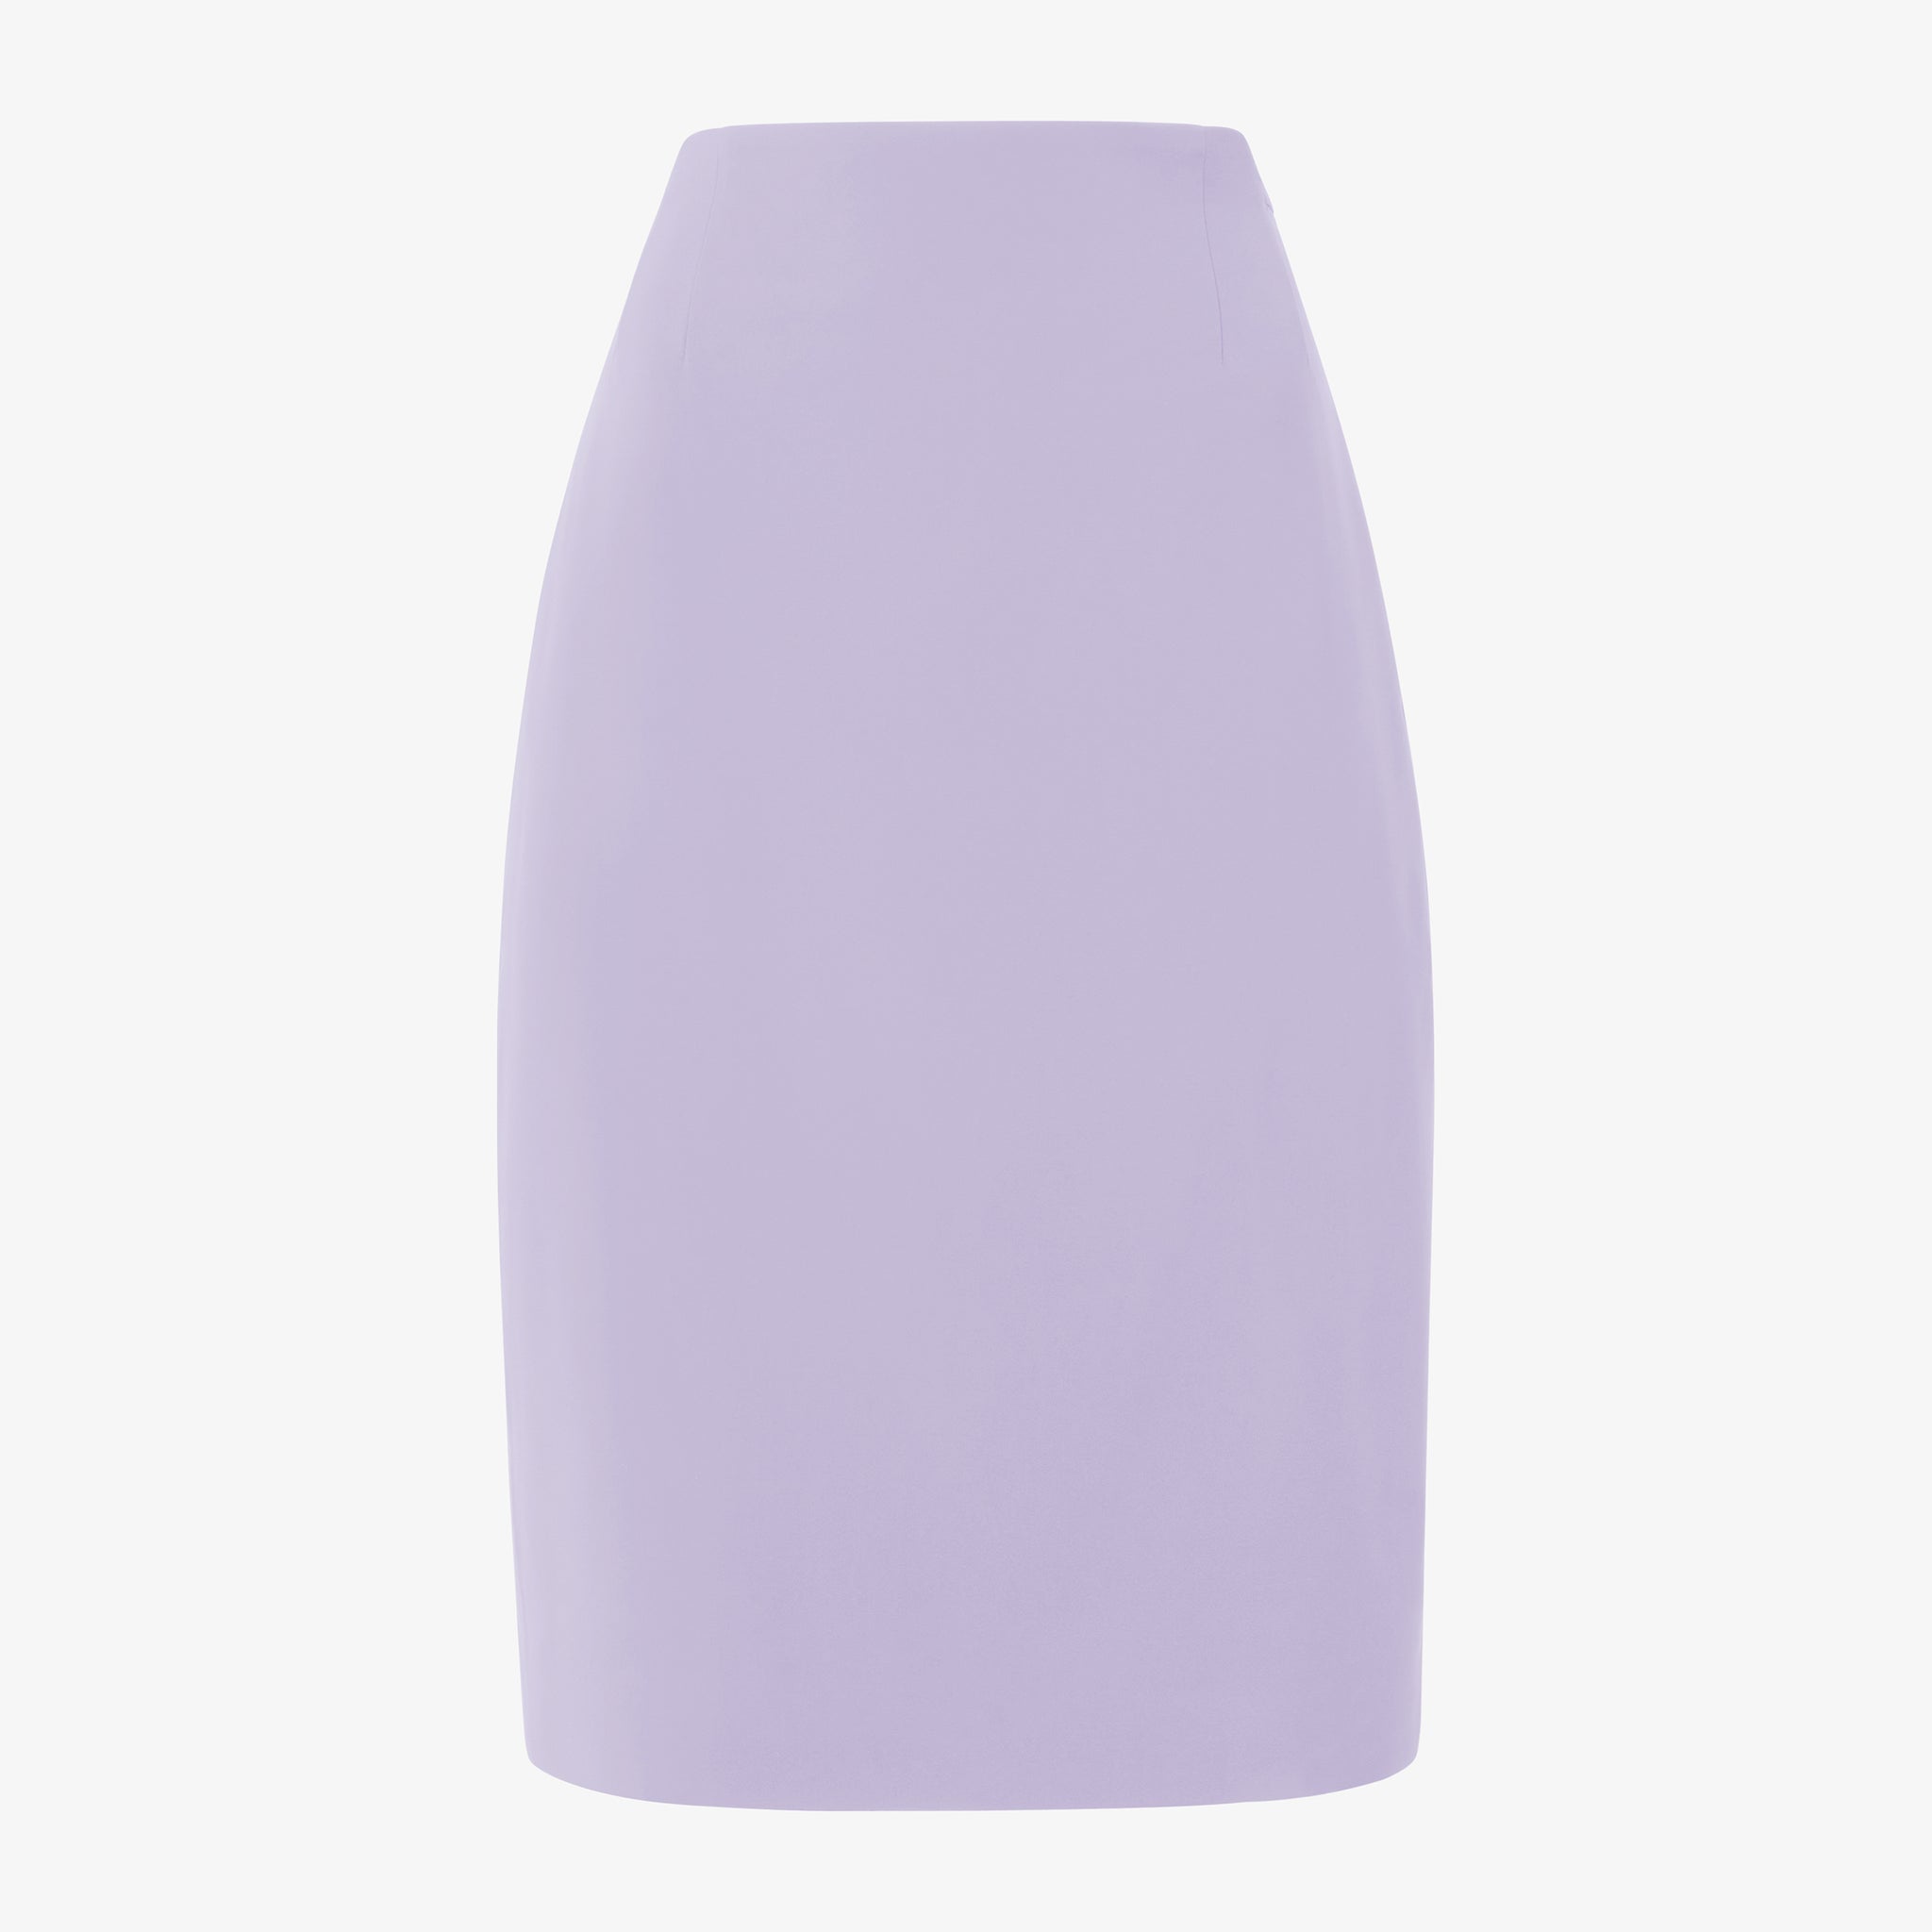 packshot image of the cobble hill skirt in light orchid